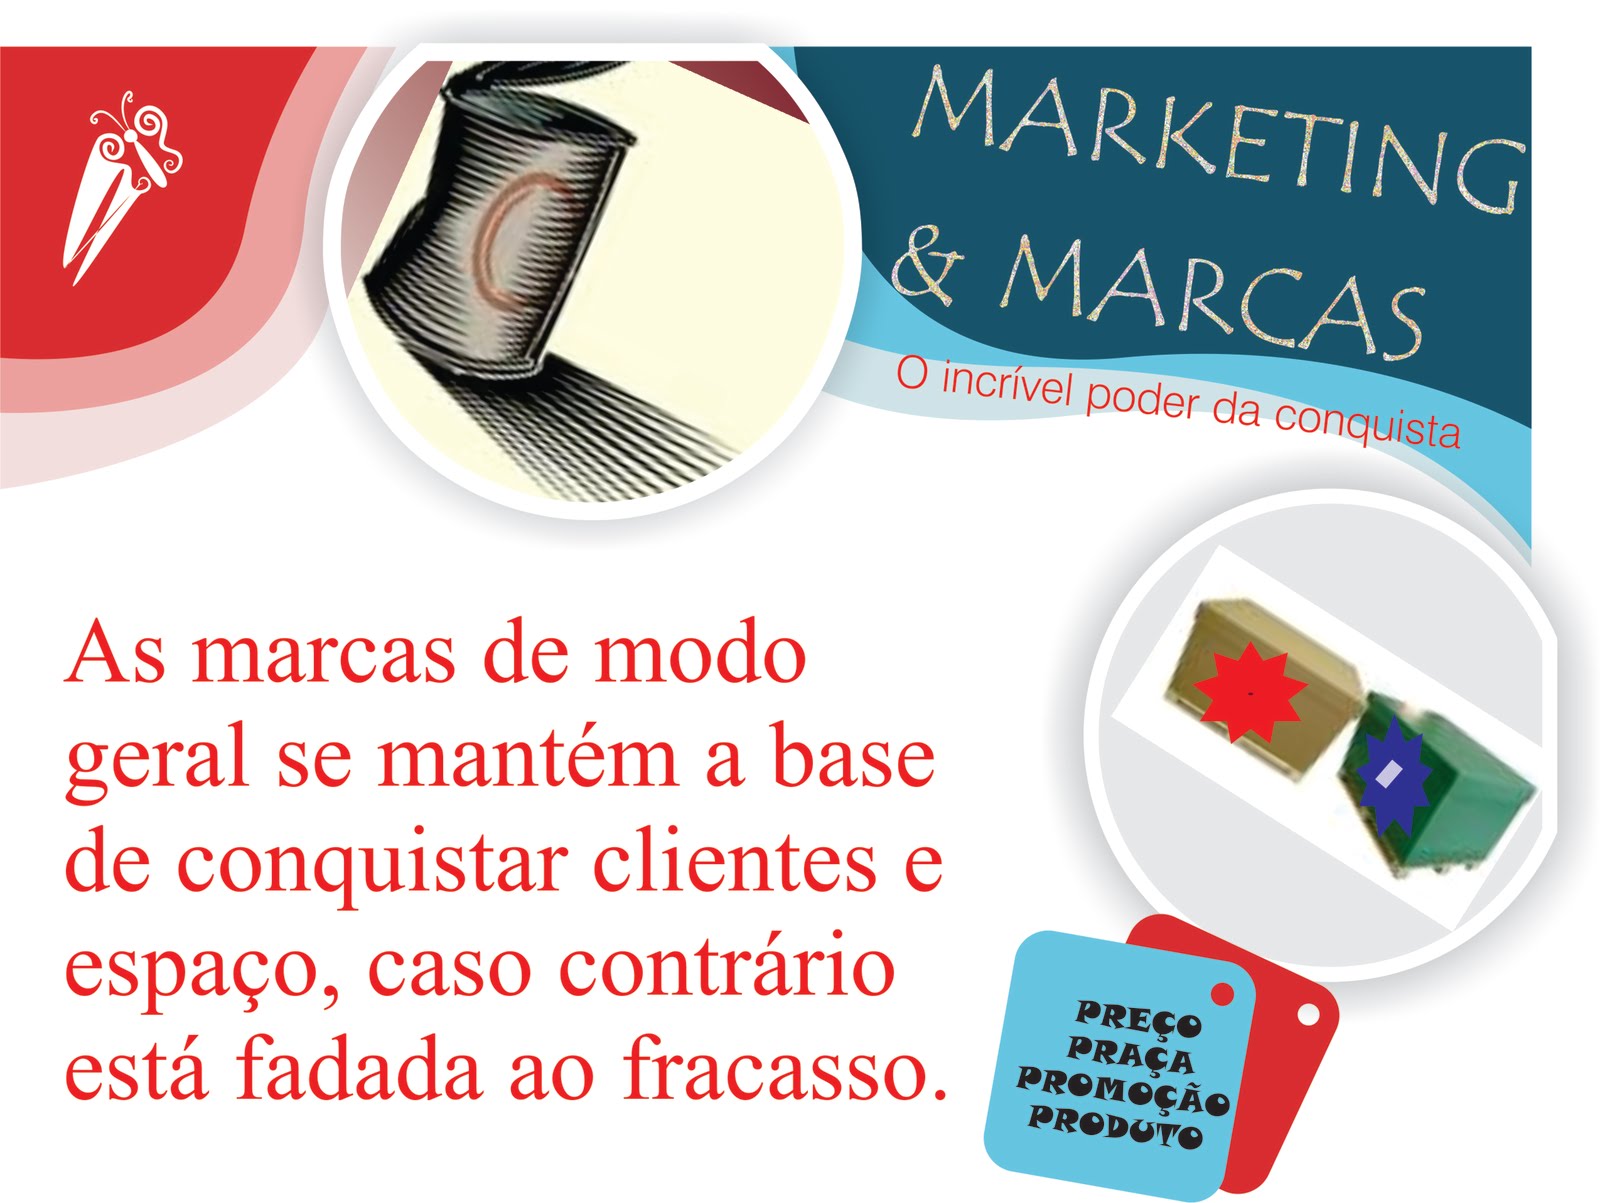 Marketing & Marcas